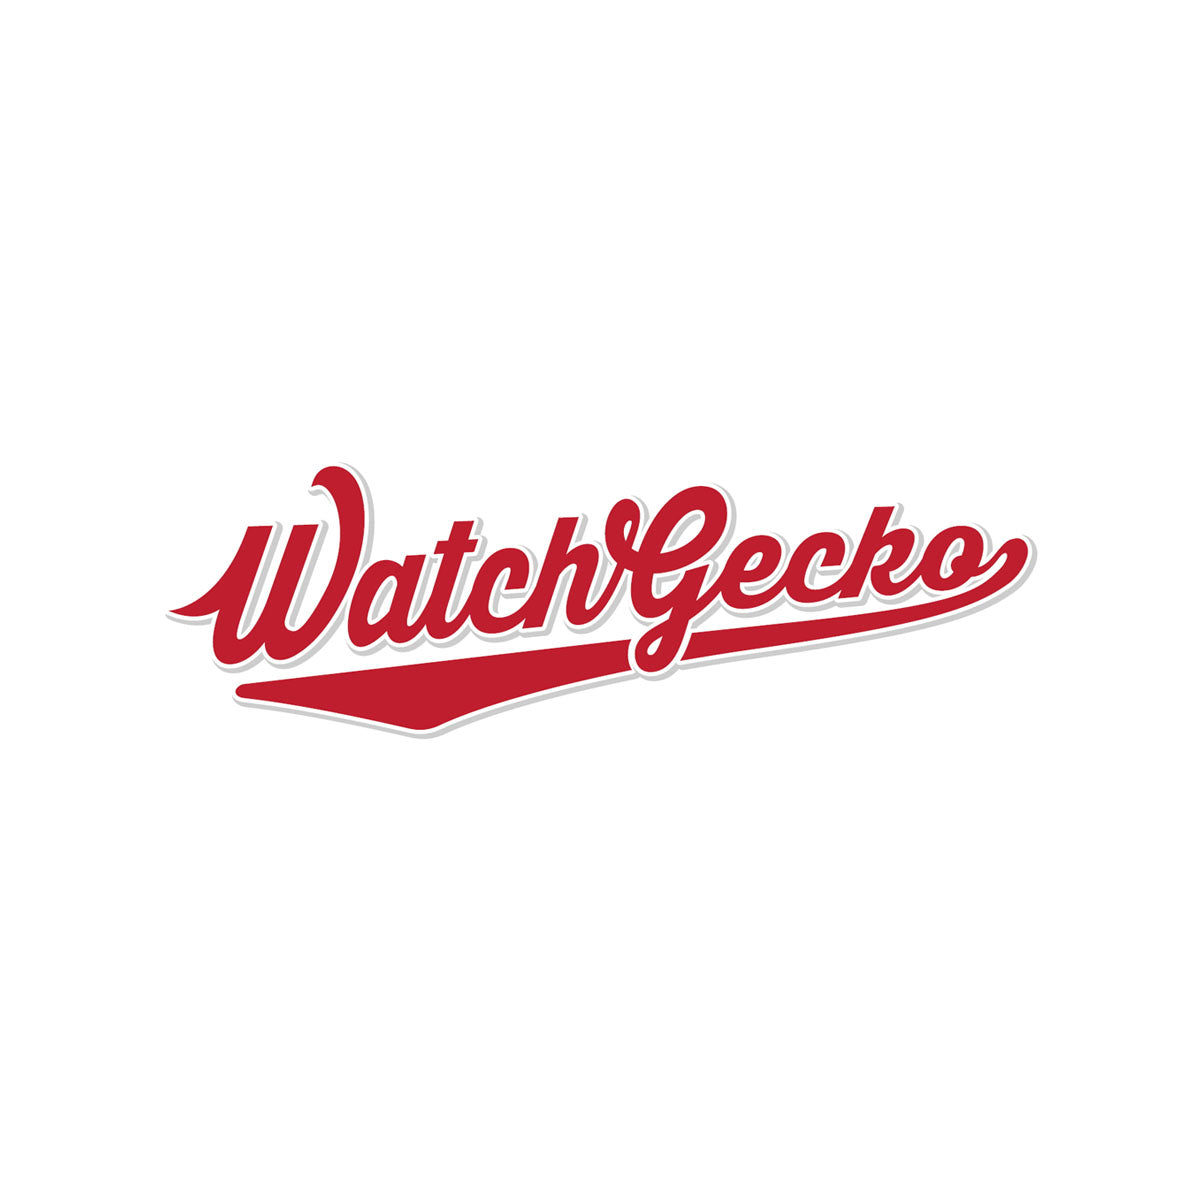 The WatchGecko Magazine Team